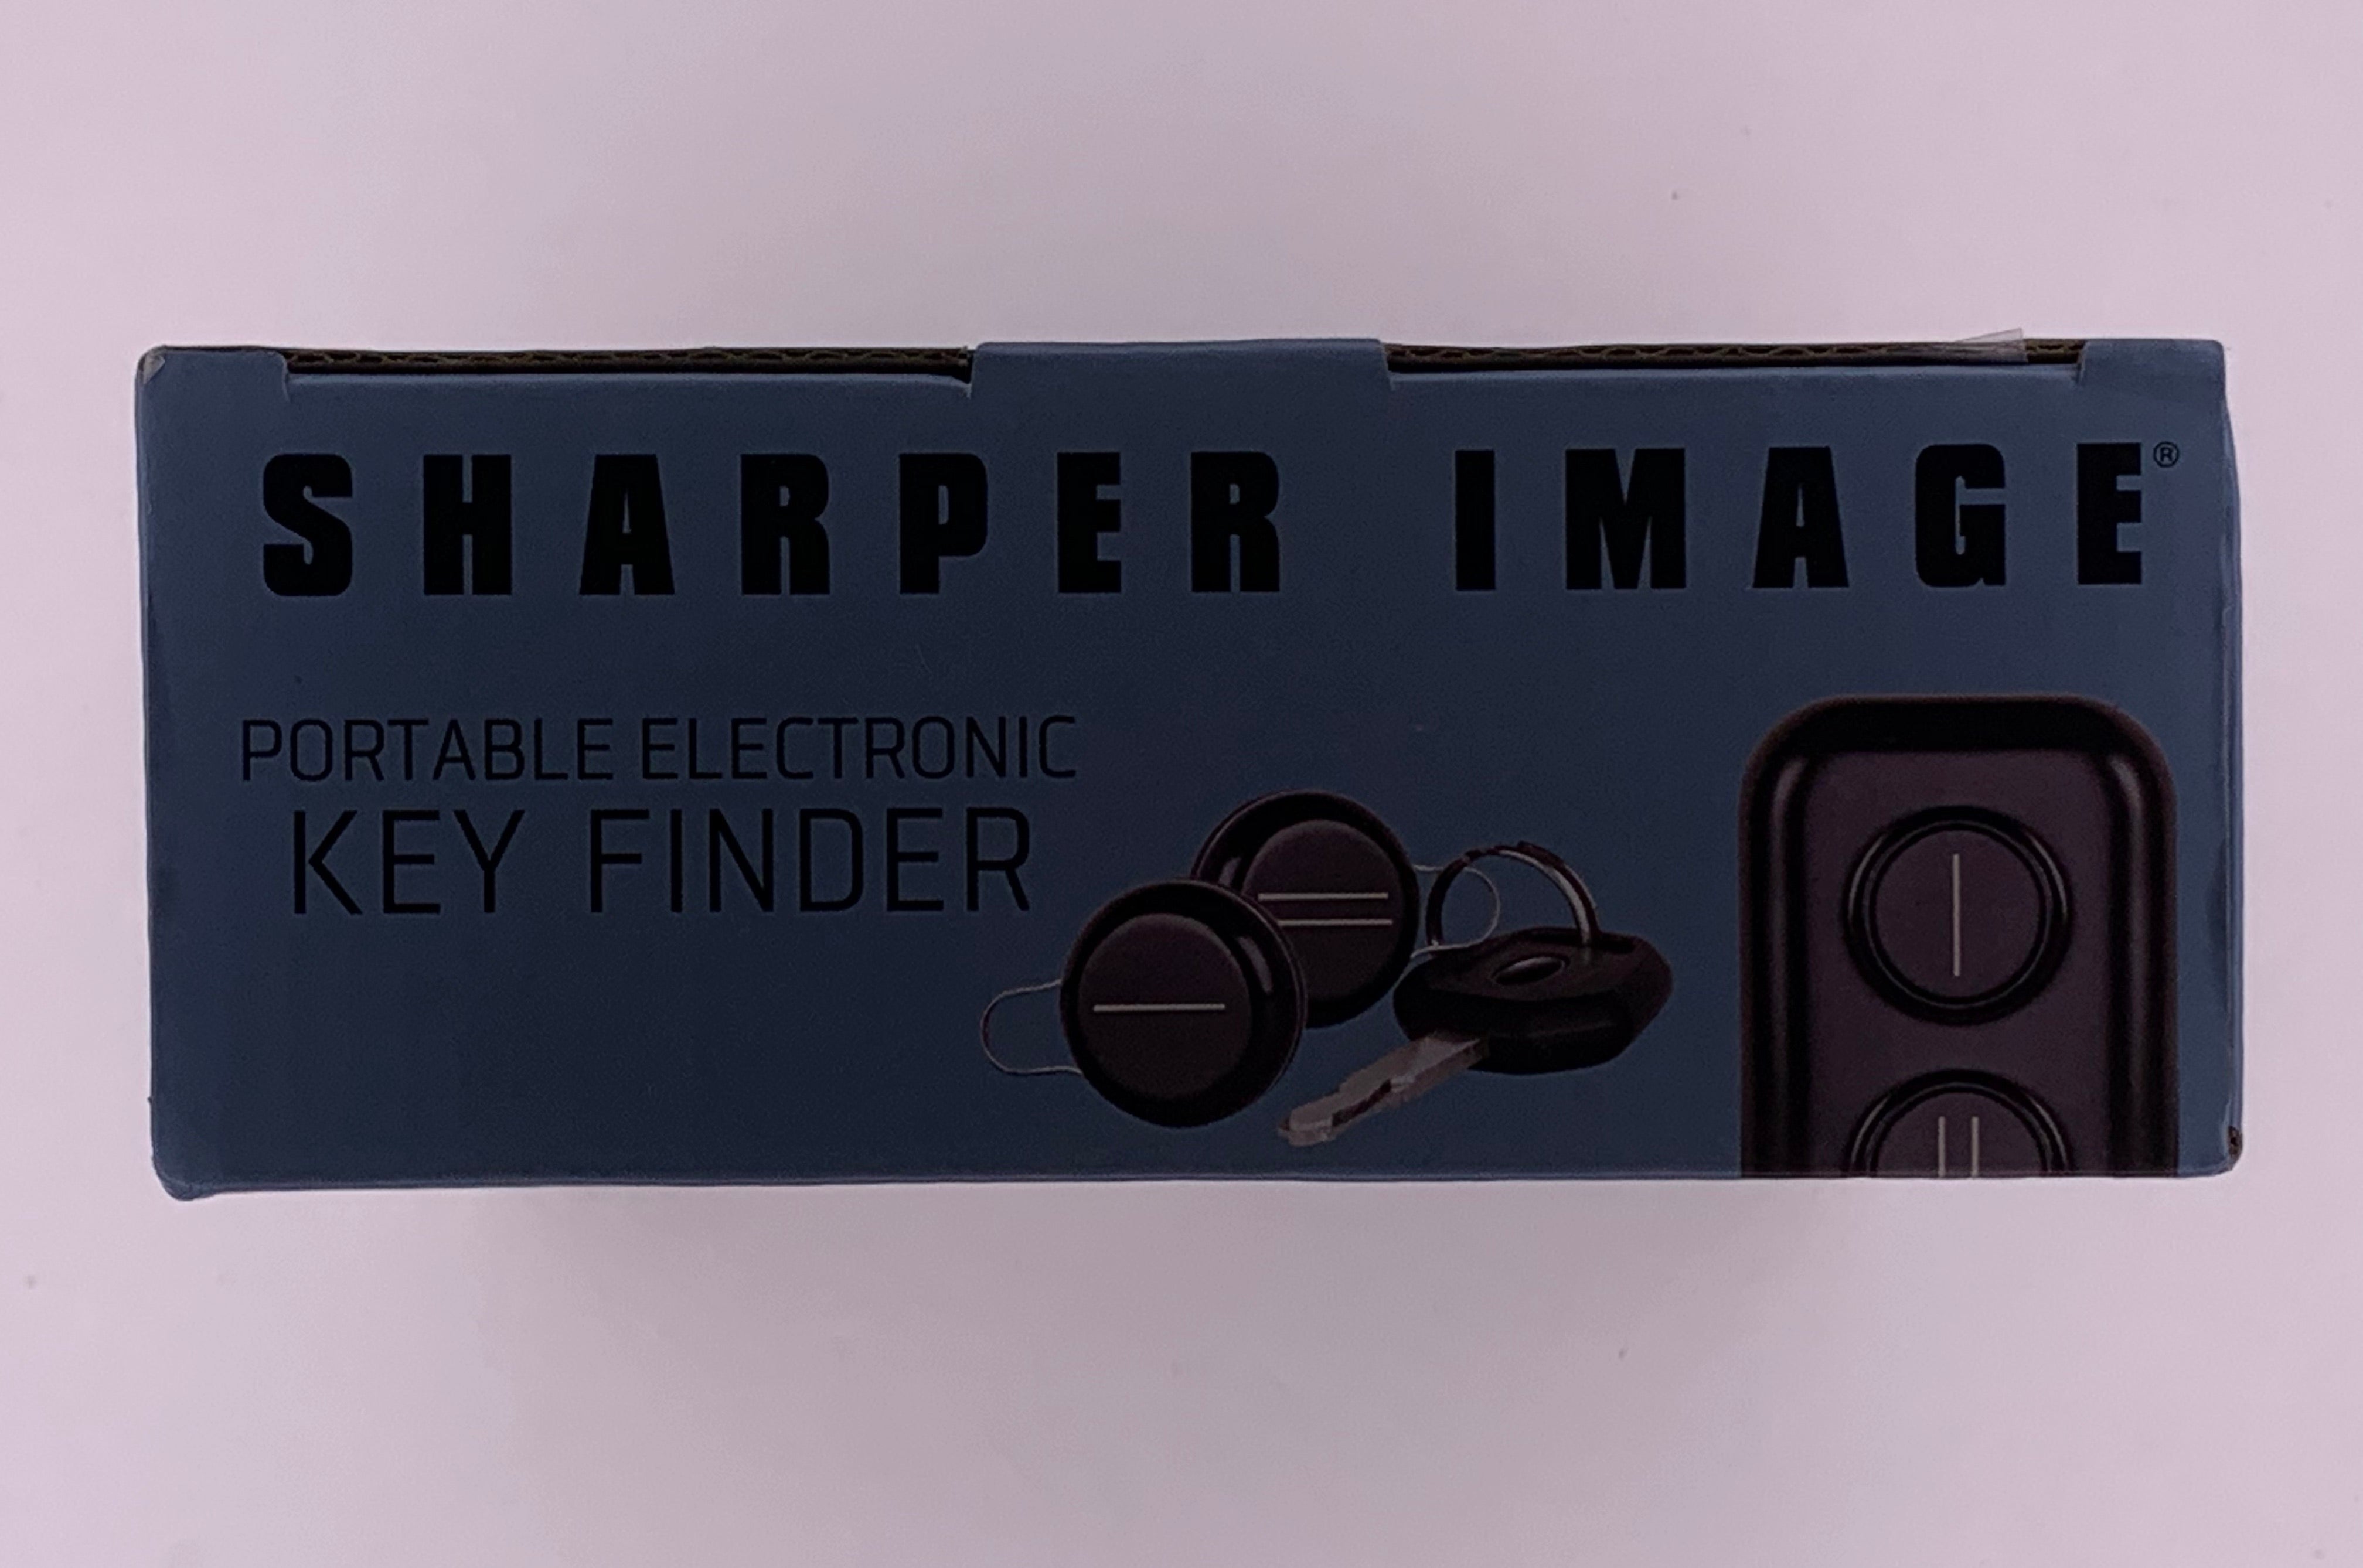 Sharper Image Portable Electronic Key Finder 45 Foot Range Black Two Fobs Wireless Alarm